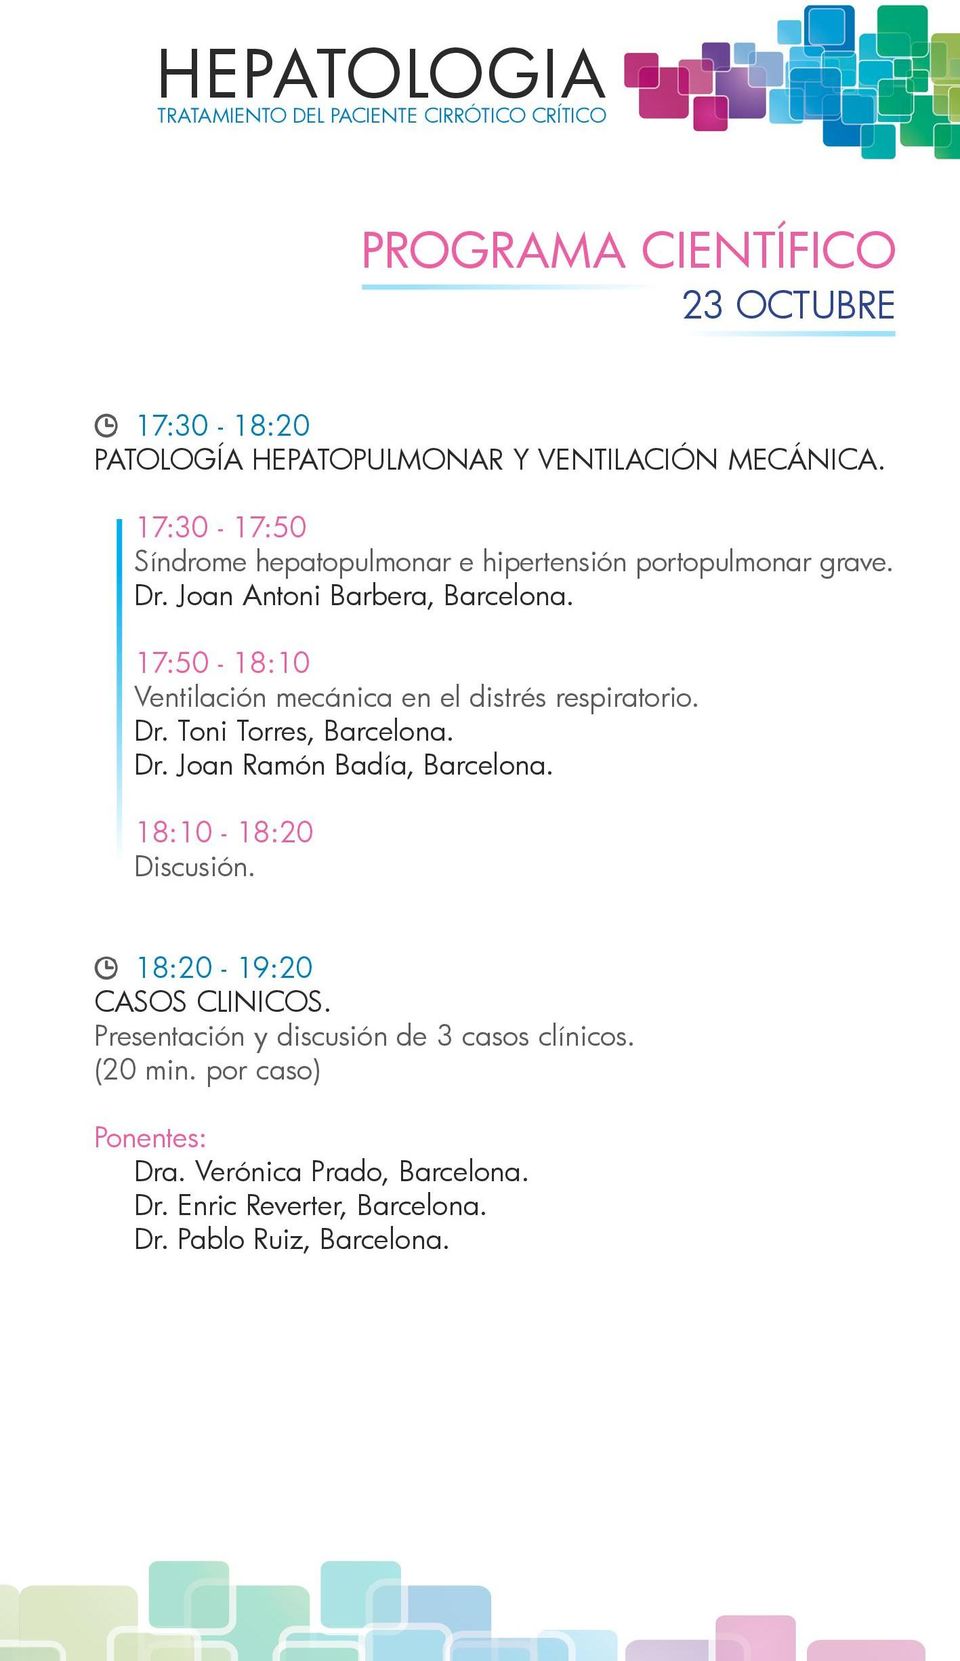 17:50-18:10 Ventilación mecánica en el distrés respiratorio. Dr. Toni Torres, Barcelona. Dr. Joan Ramón Badía, Barcelona.